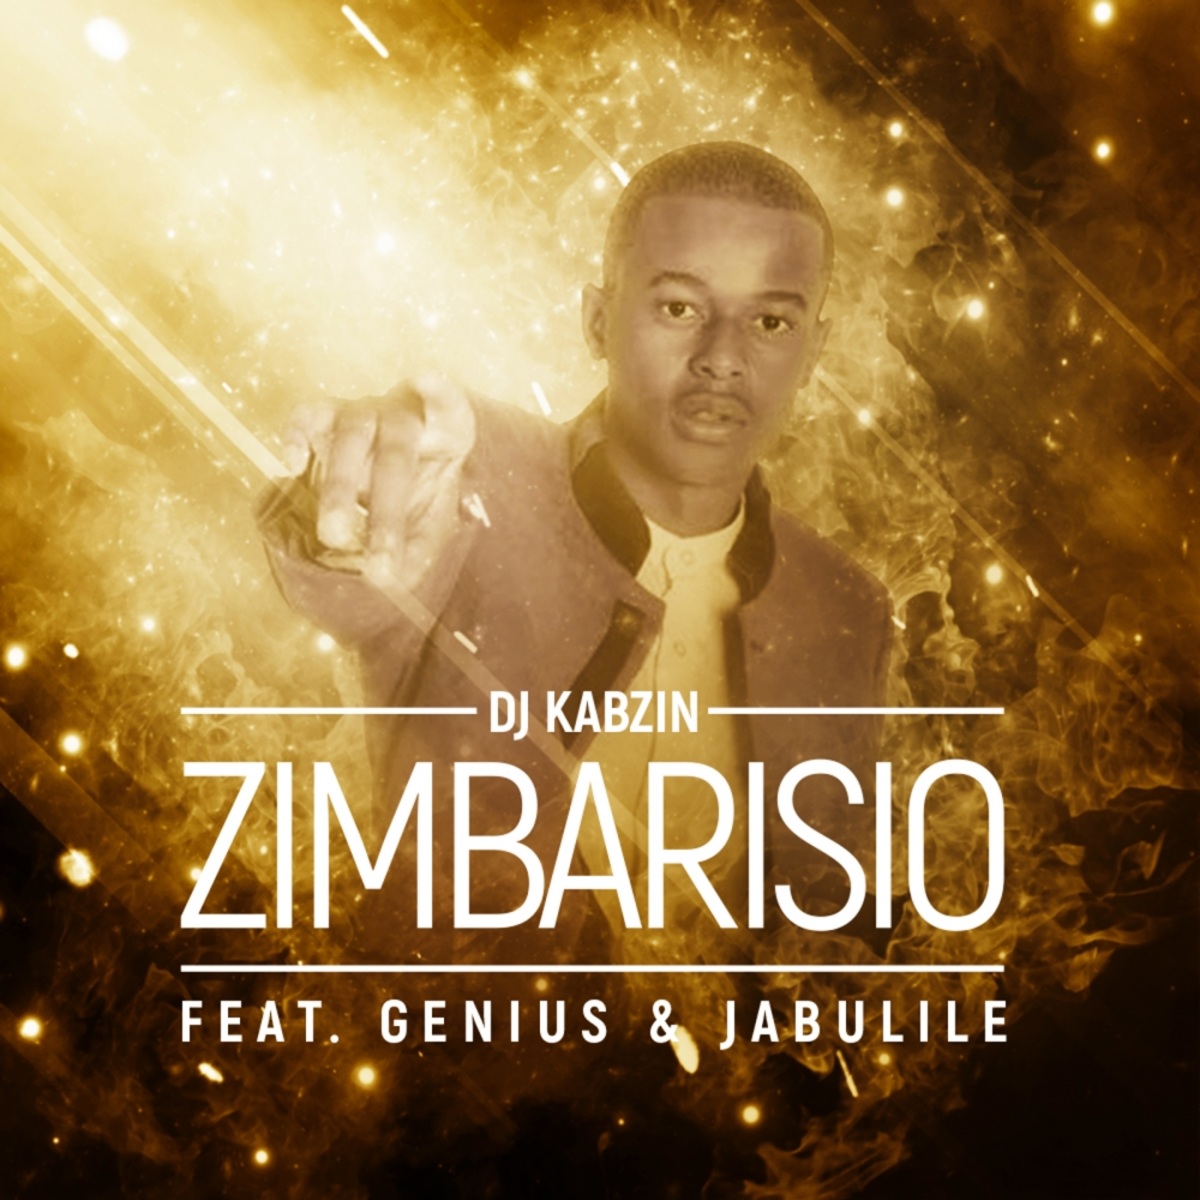 Kabzin ft Genius & Jabulie - Zimbarisio / Liberation Sundays